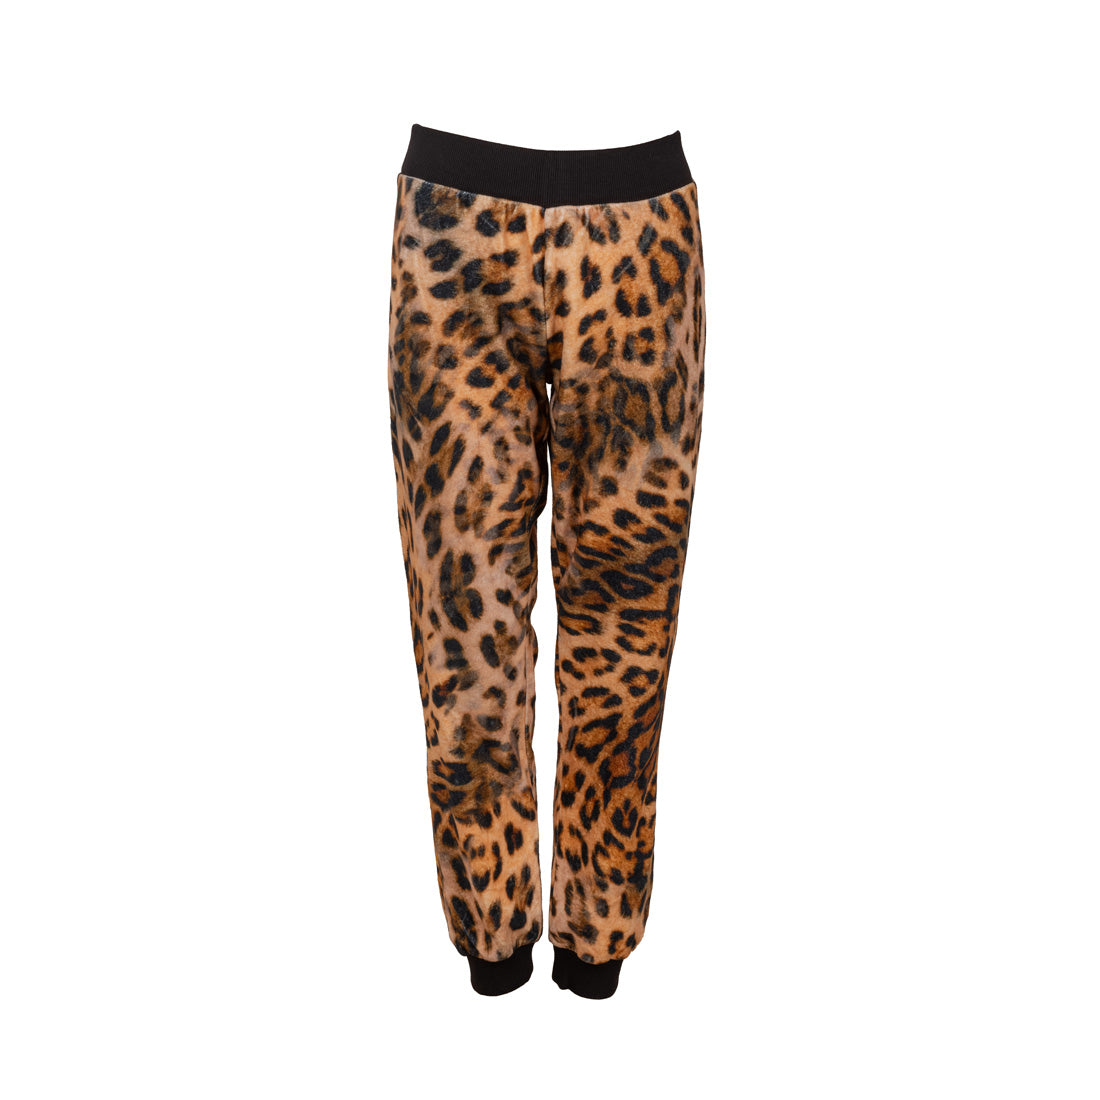 Zara Trafaluc Brand New Pants